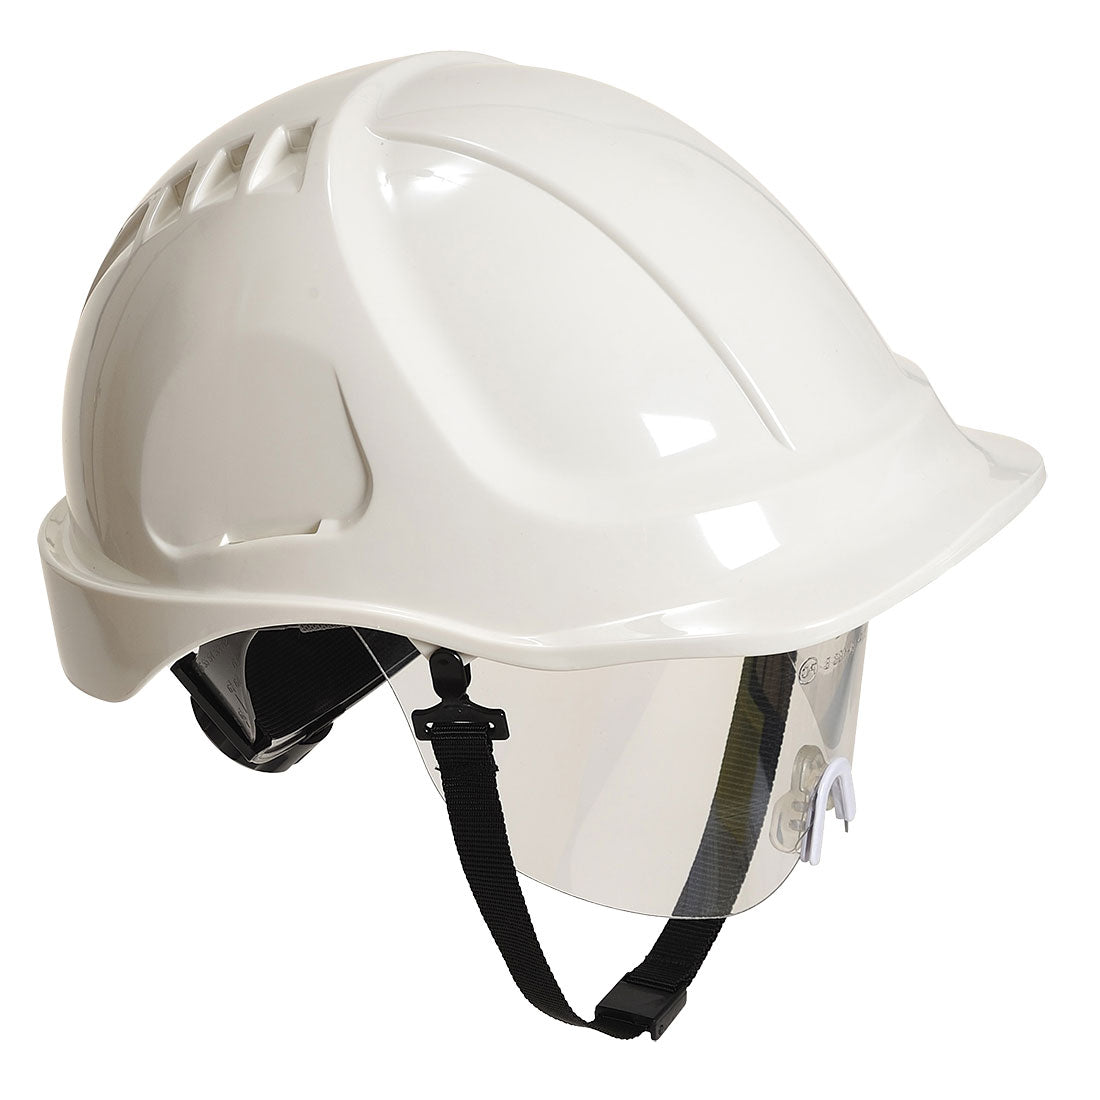 Portwest PW54 Endurance Plus Visor Helmet - White